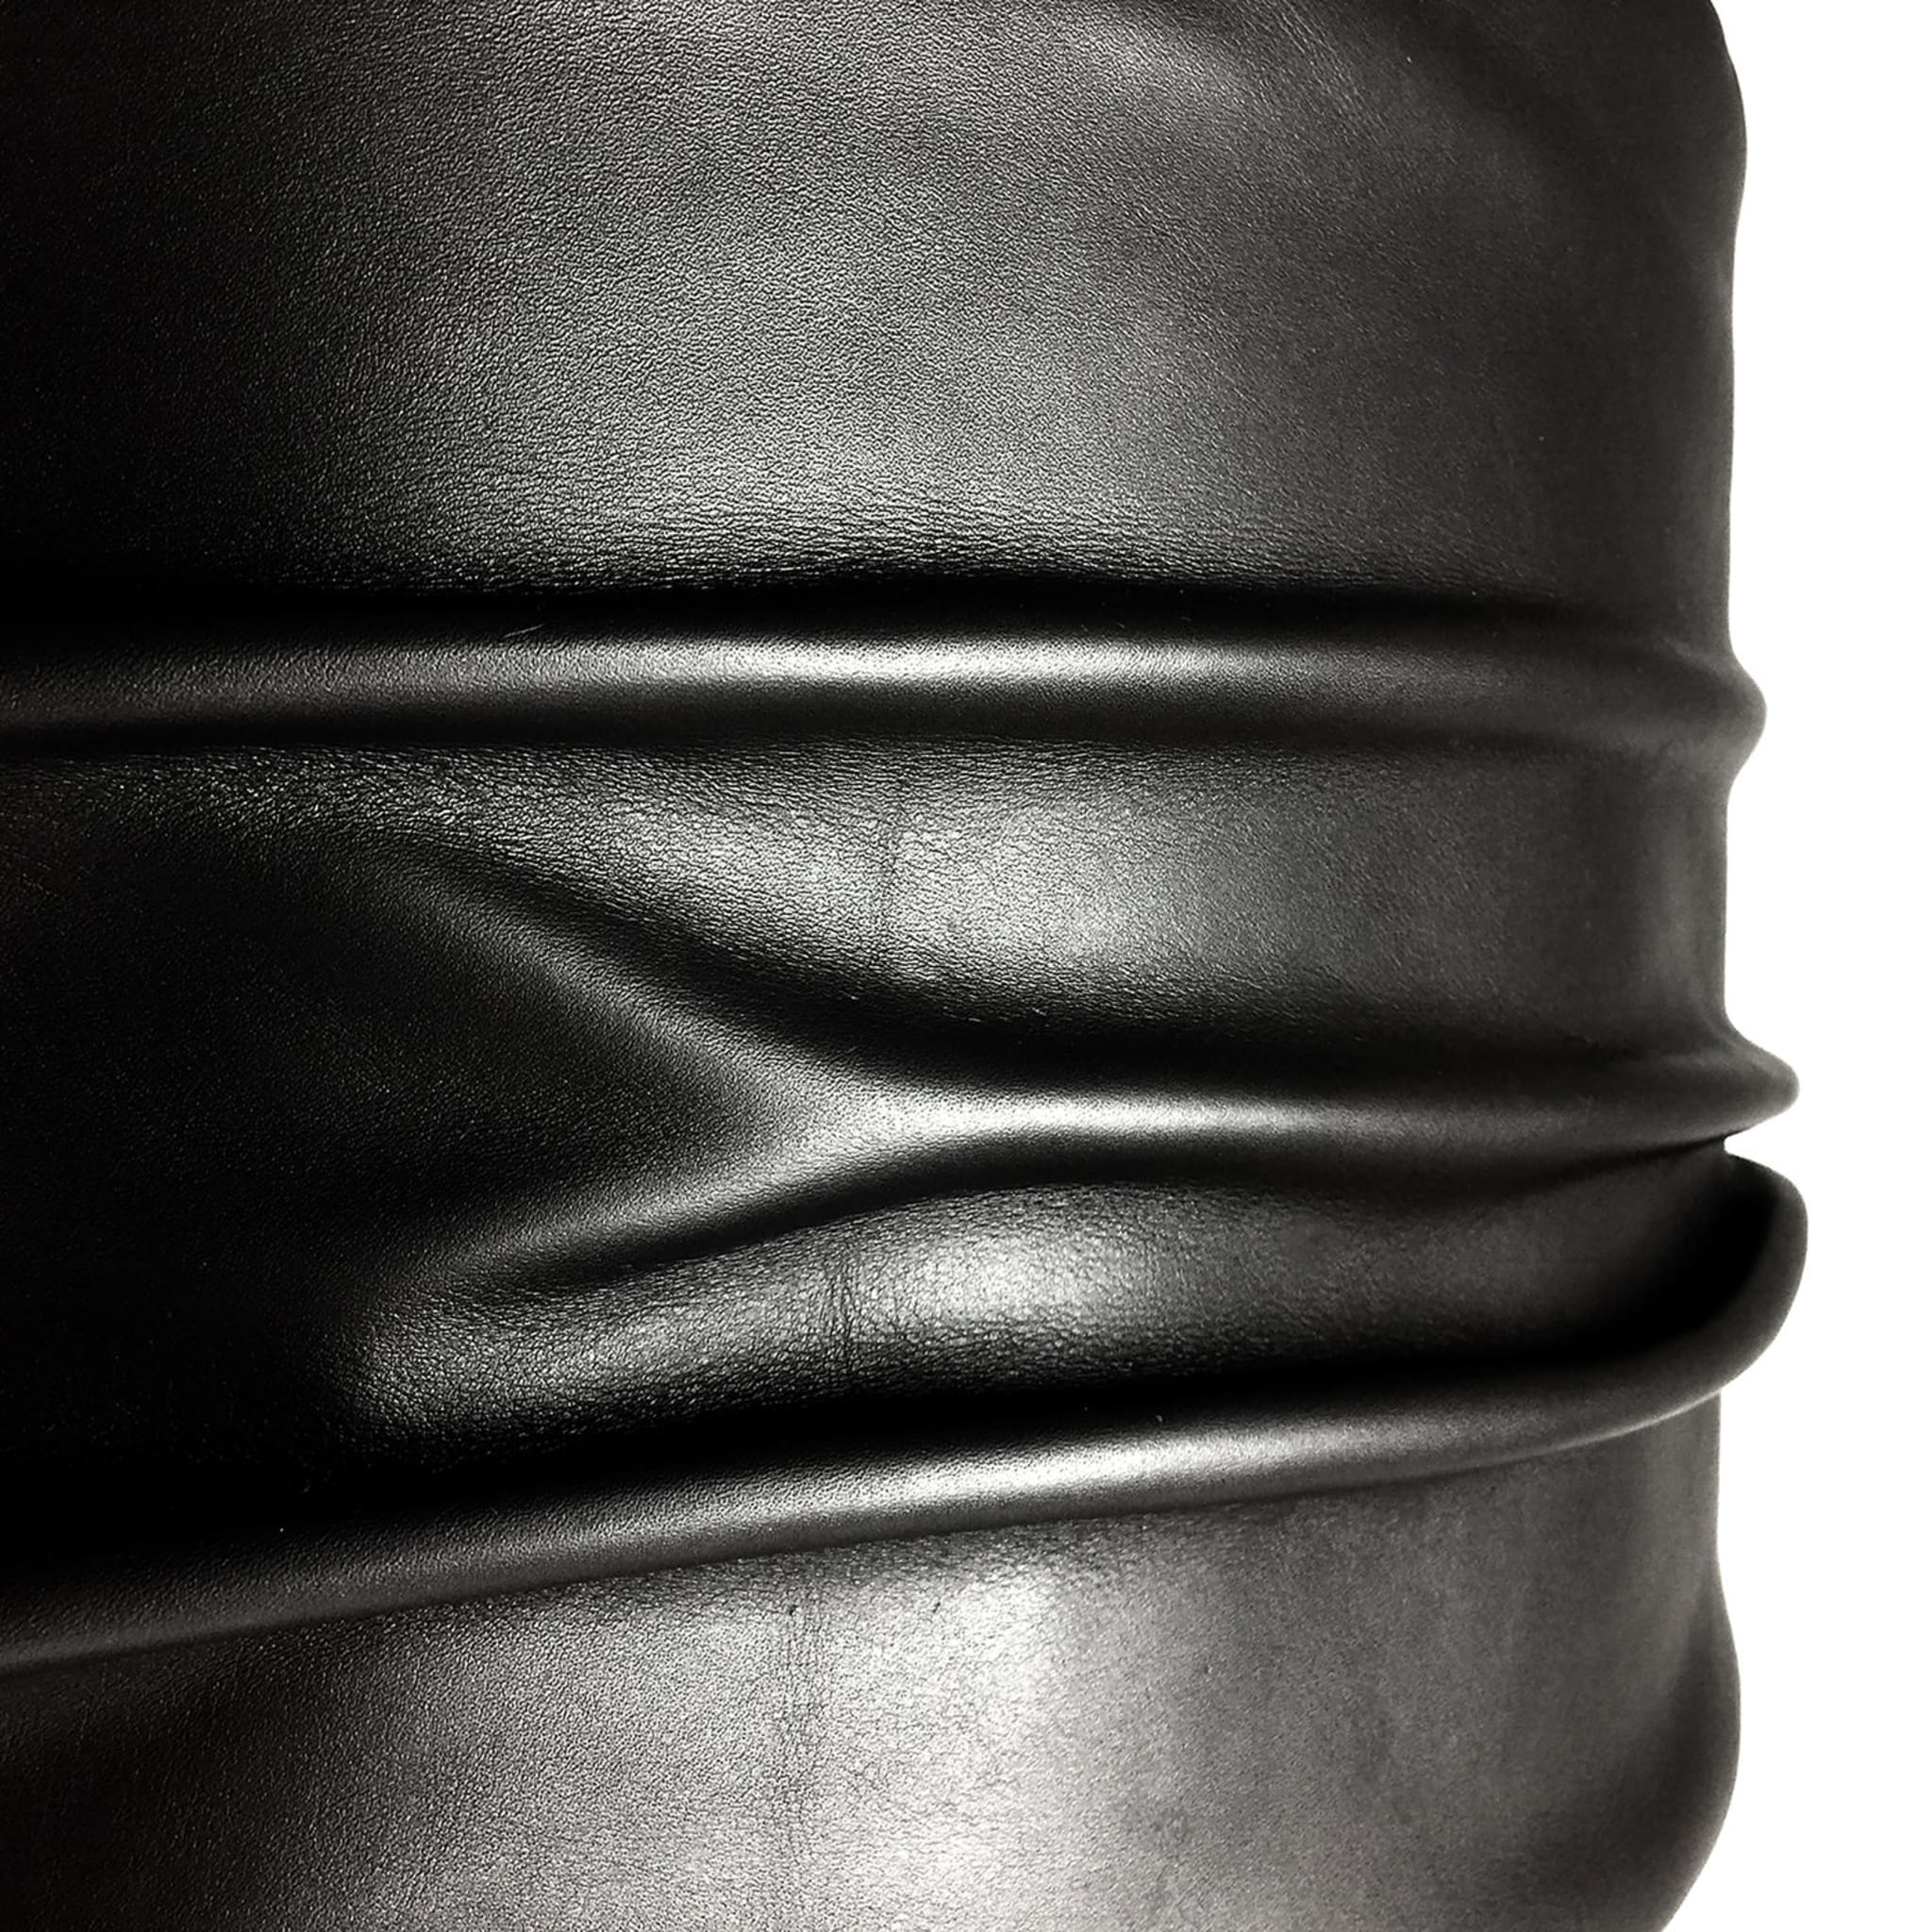 Semele Black Leather Table Lamp #2 - Alternative view 2